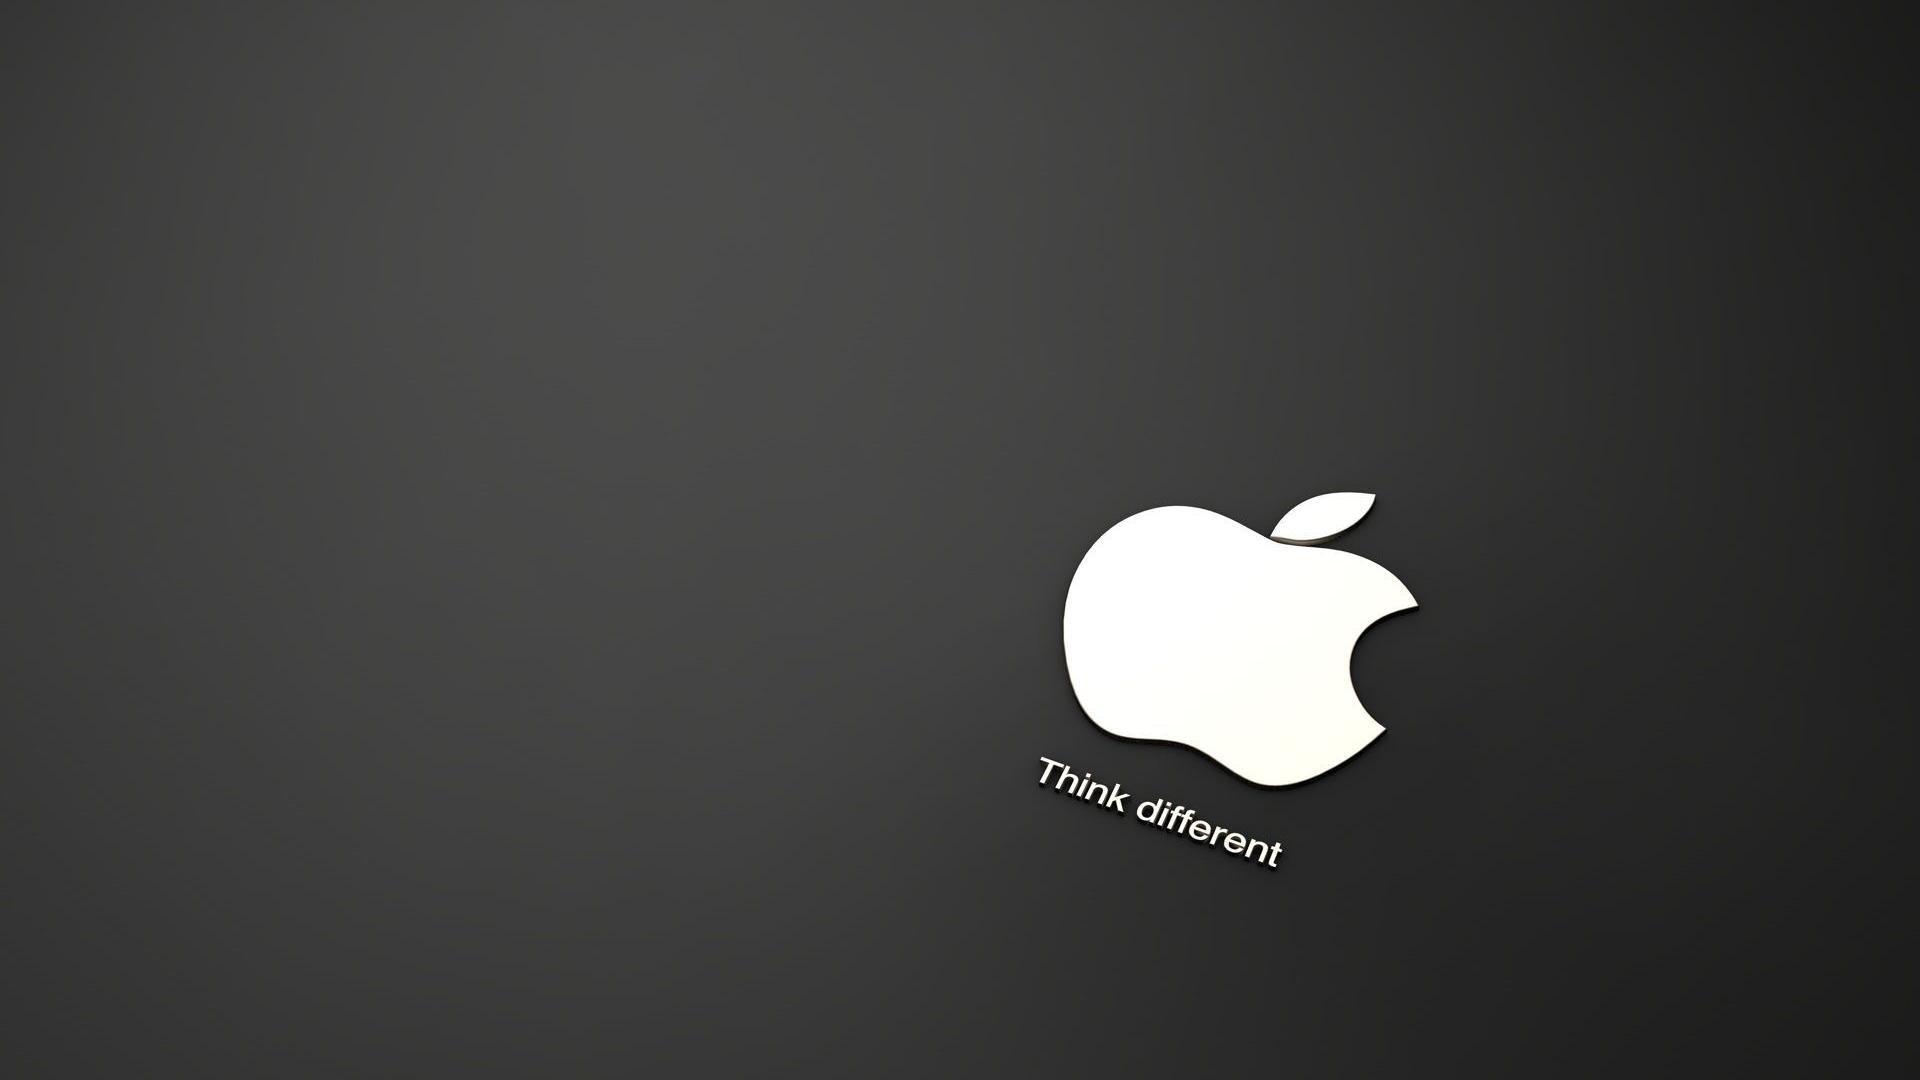 Apple Logo Black and White 1080p HD Black Wallpaper. B